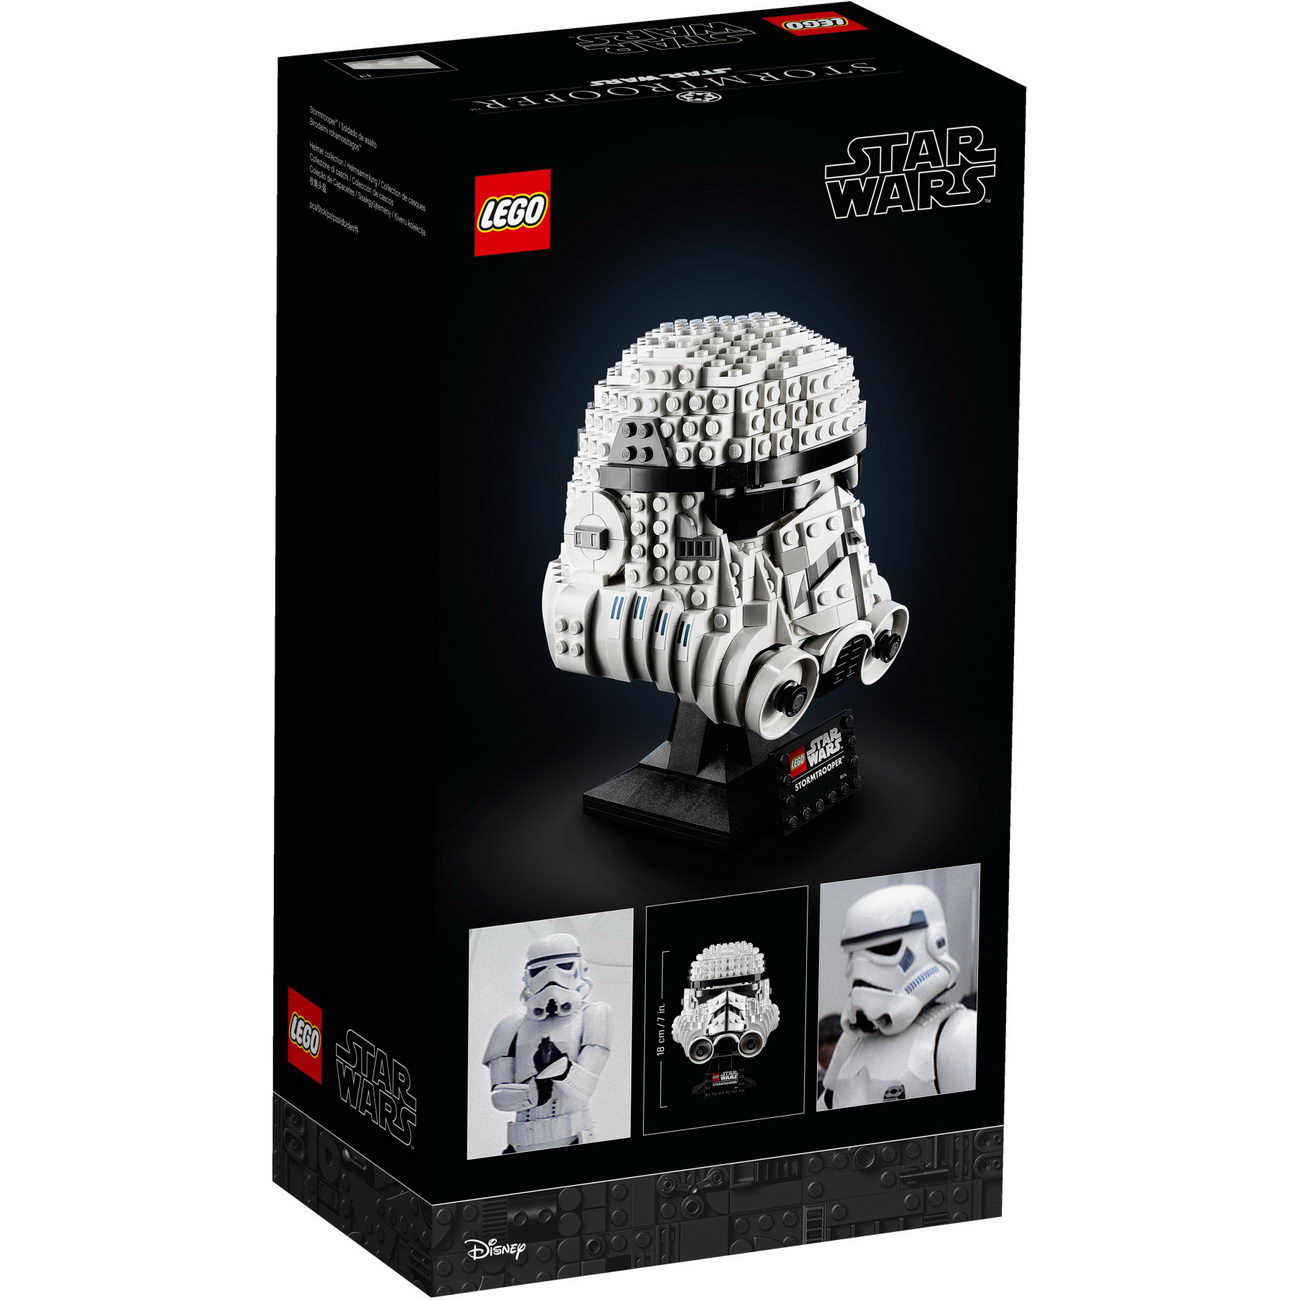 LEGO Star Wars - Stormtrooper Helm (75276)